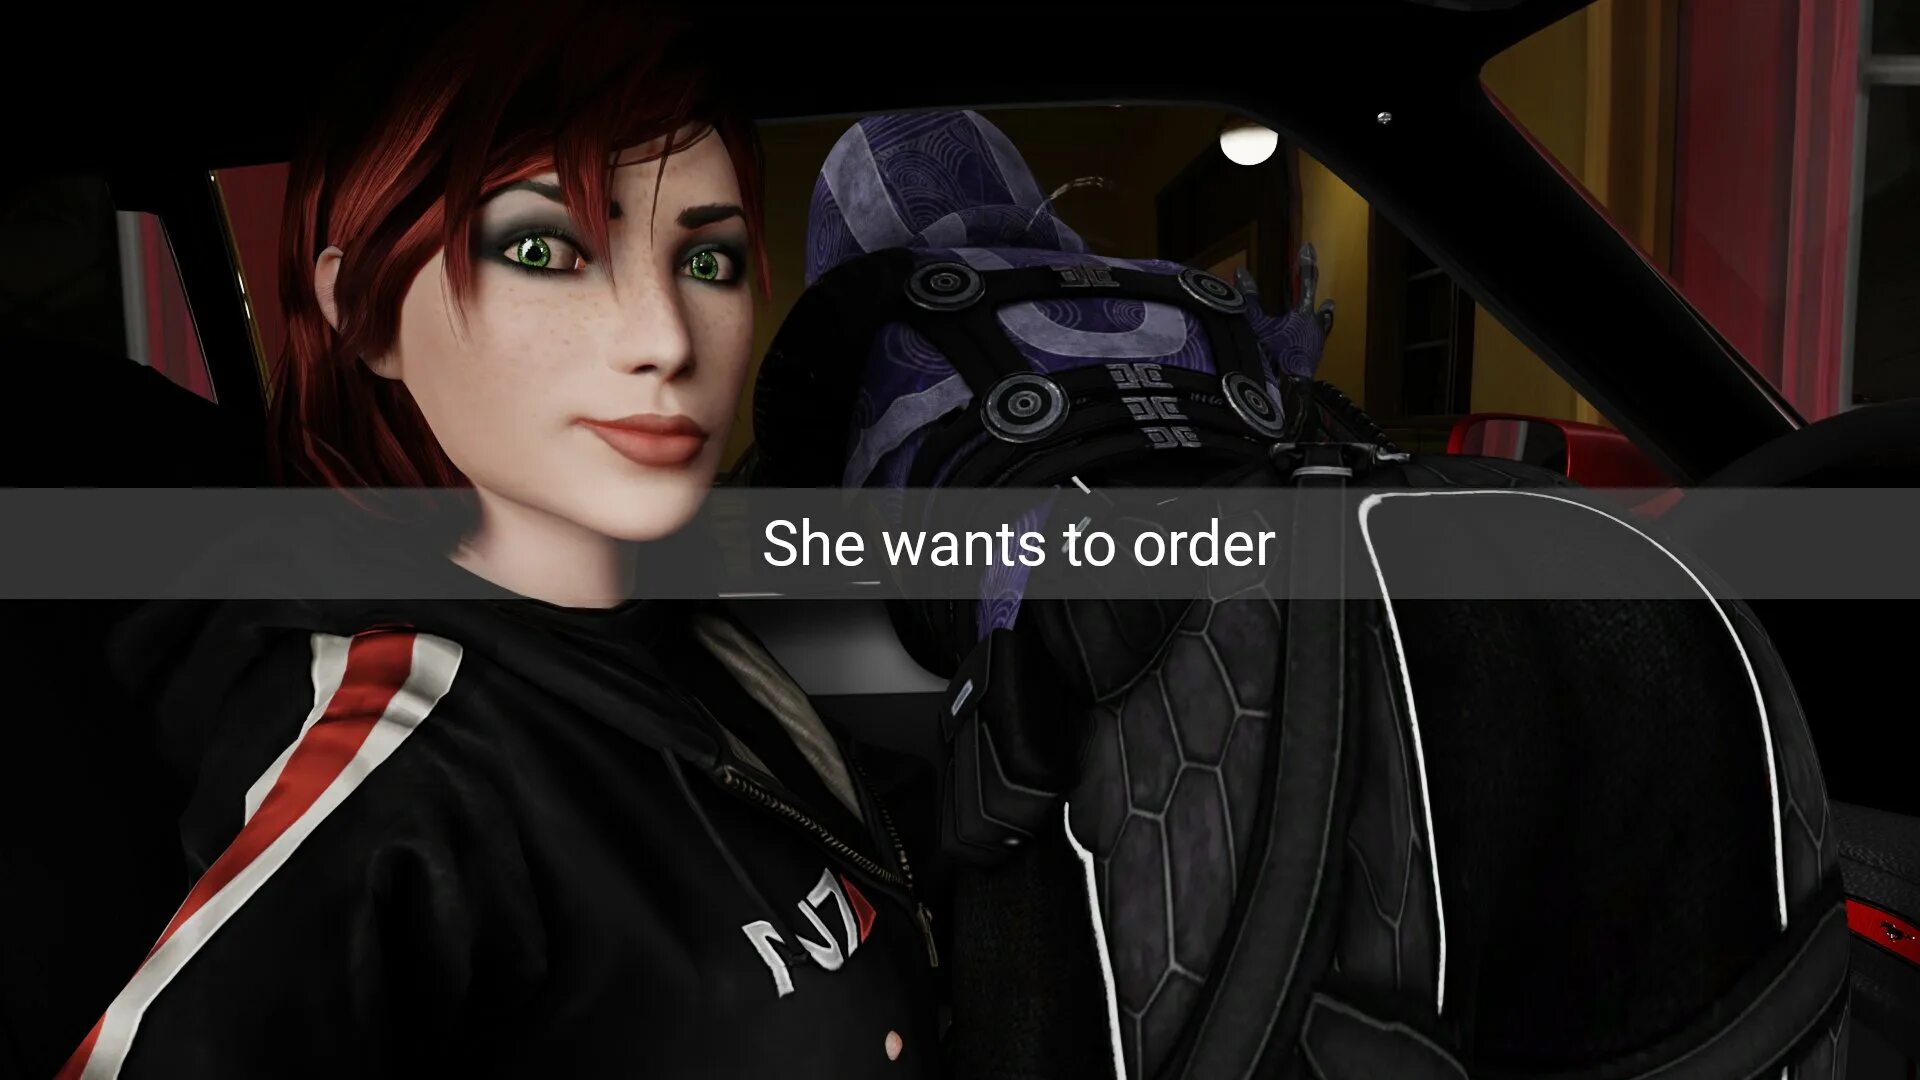 She ordered them to. Фем Шепард с красными глазами. Mass Effect девушки враги. Фем Шепард броня и одежда. She wants order.